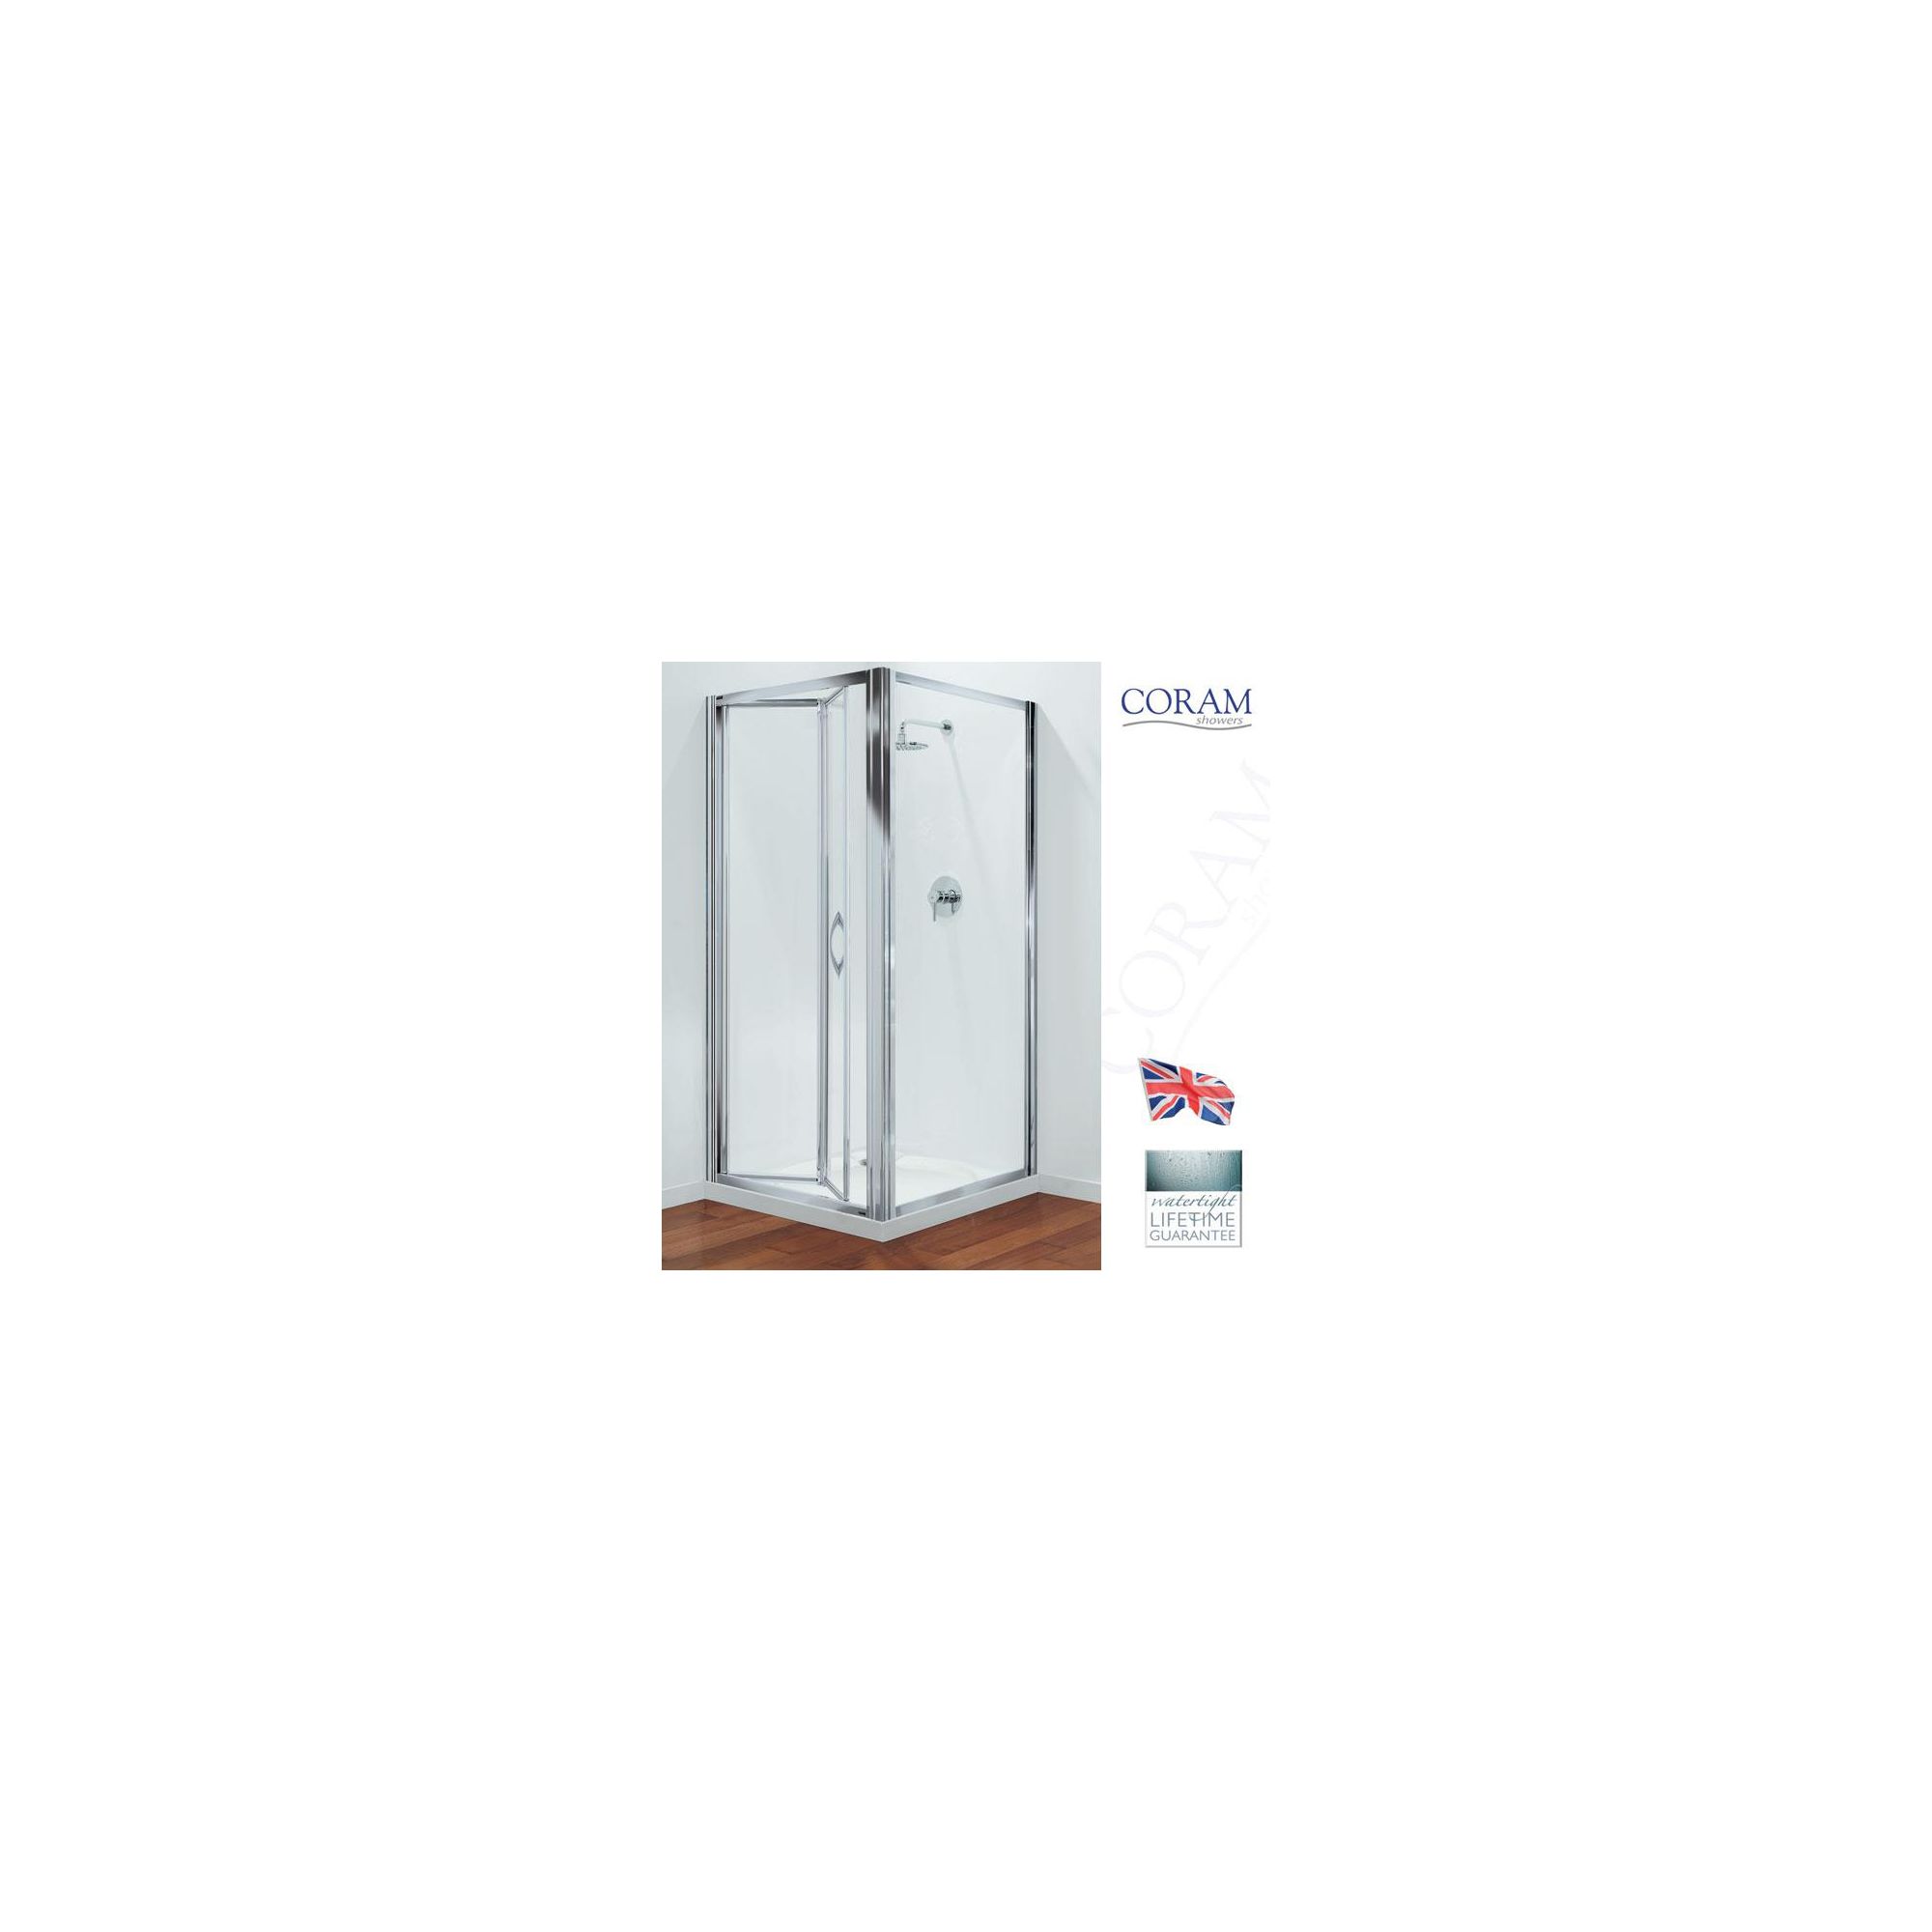 Coram Premier Bi-Fold Door Shower Enclosure, 1000mm x 800mm, Low Profile Tray, 6mm Glass at Tesco Direct